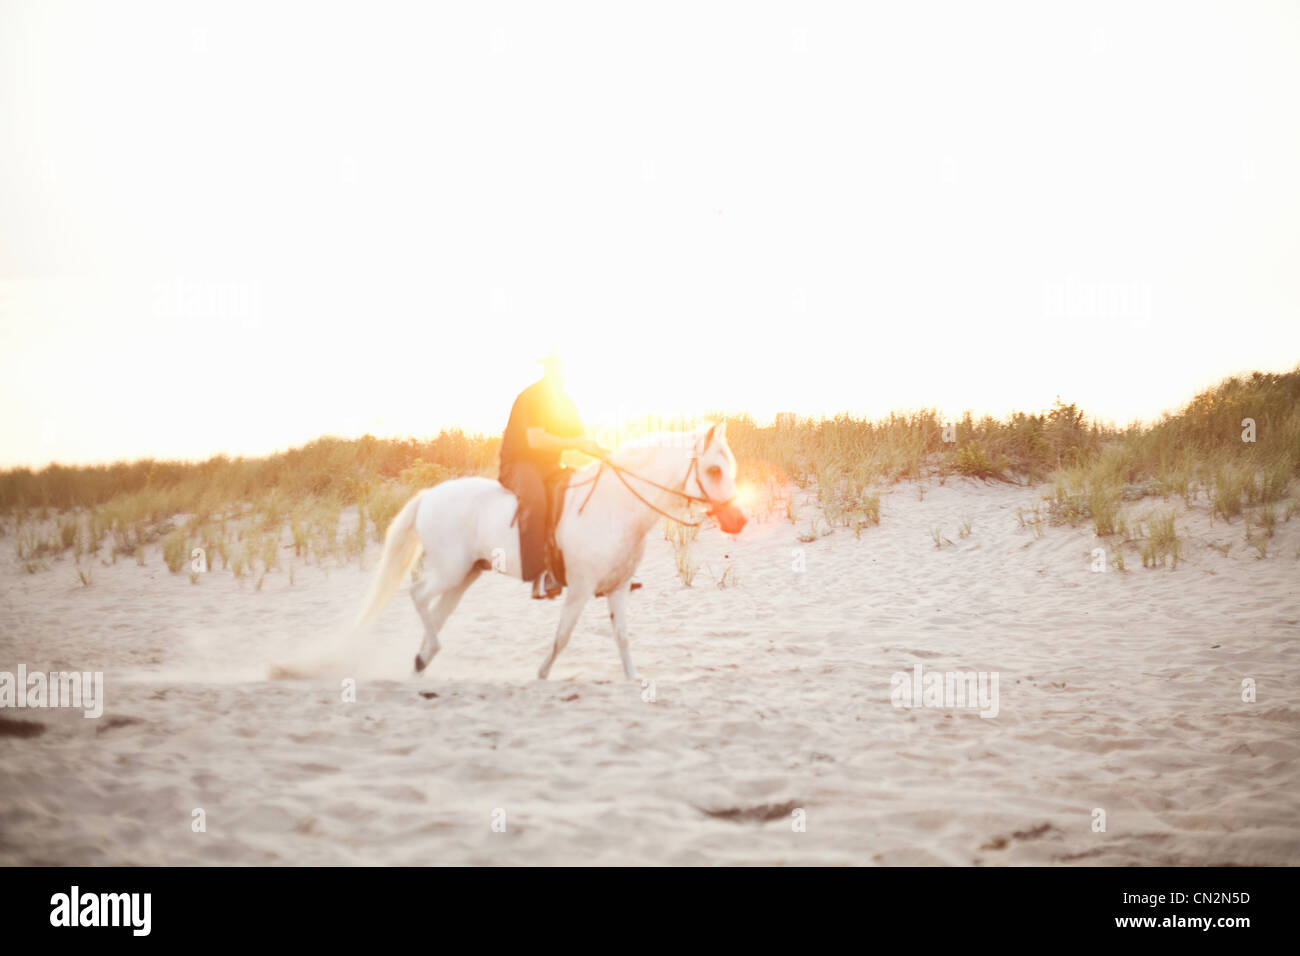 Person horse riding on beach Stock Photo